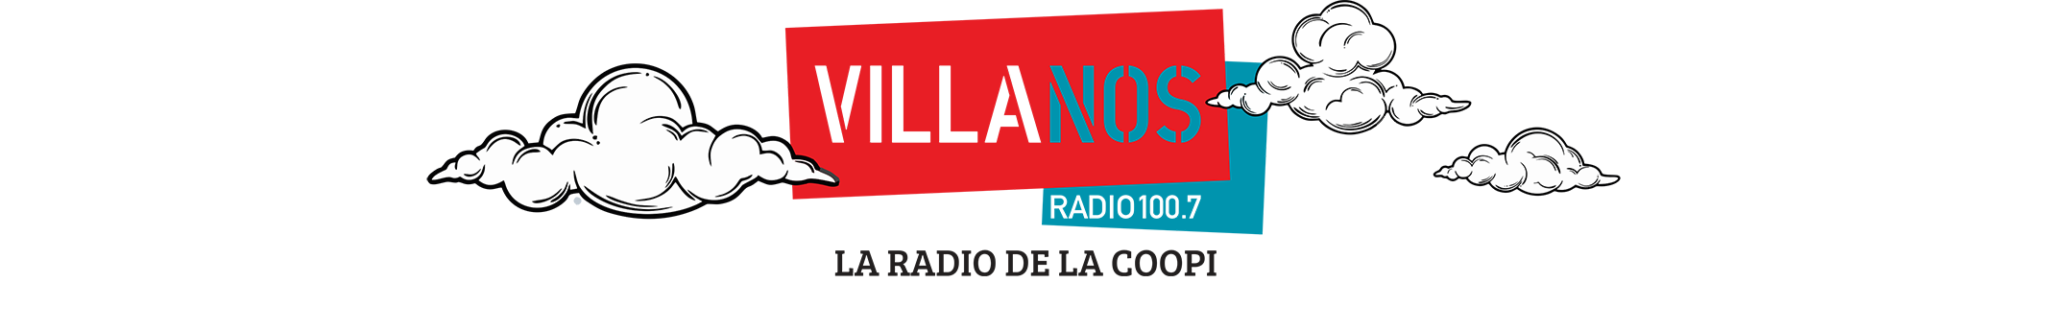 Villanos Radio